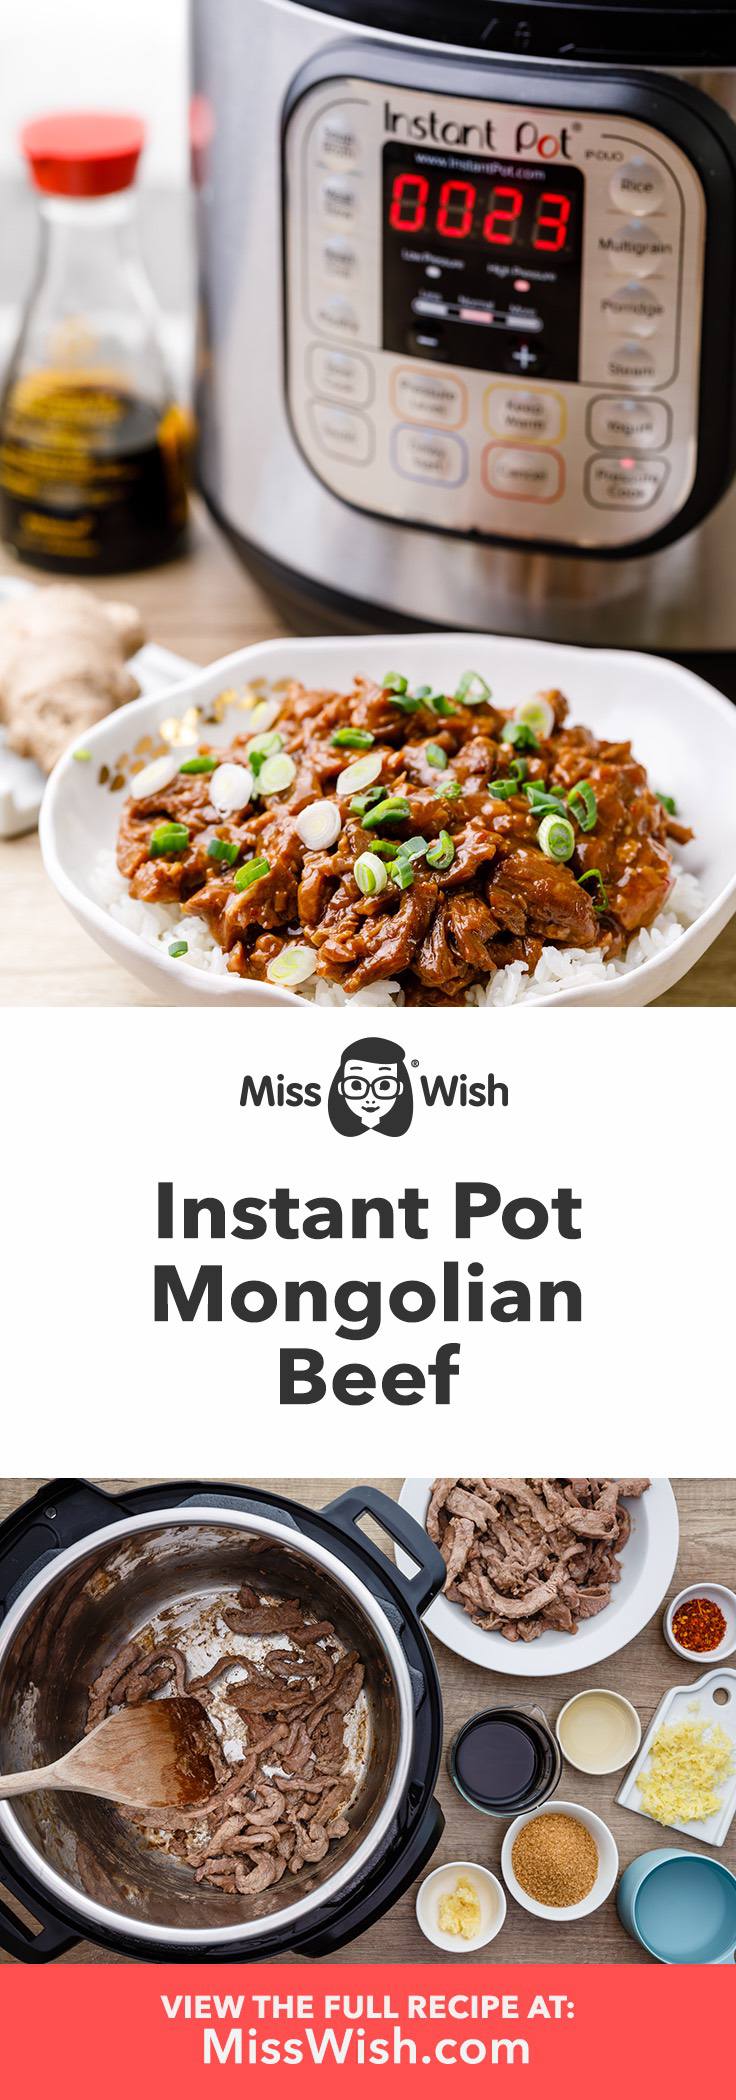 15-Minute Instant Pot Mongolian Beef